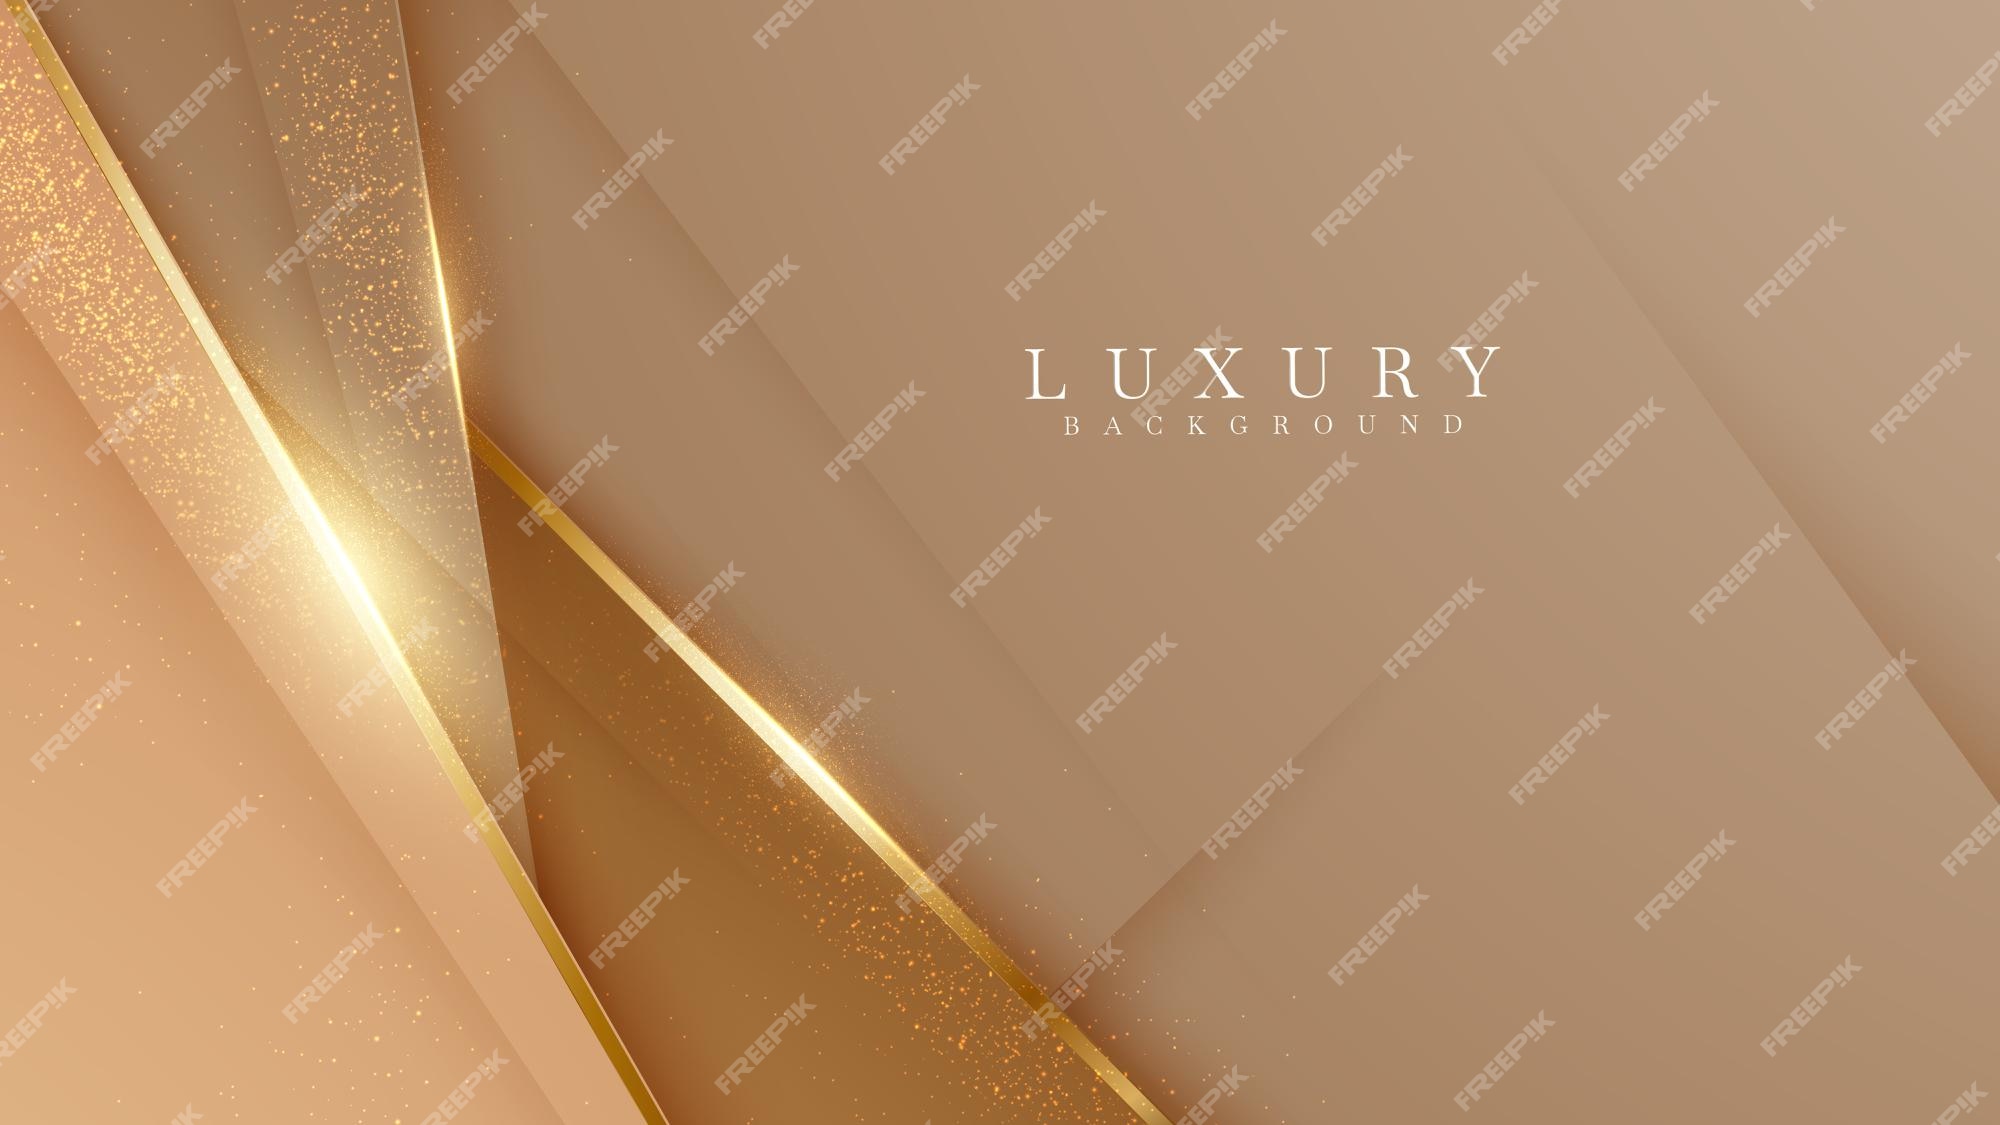 Premium Vector | Elegant brown shade background with line golden elements  design